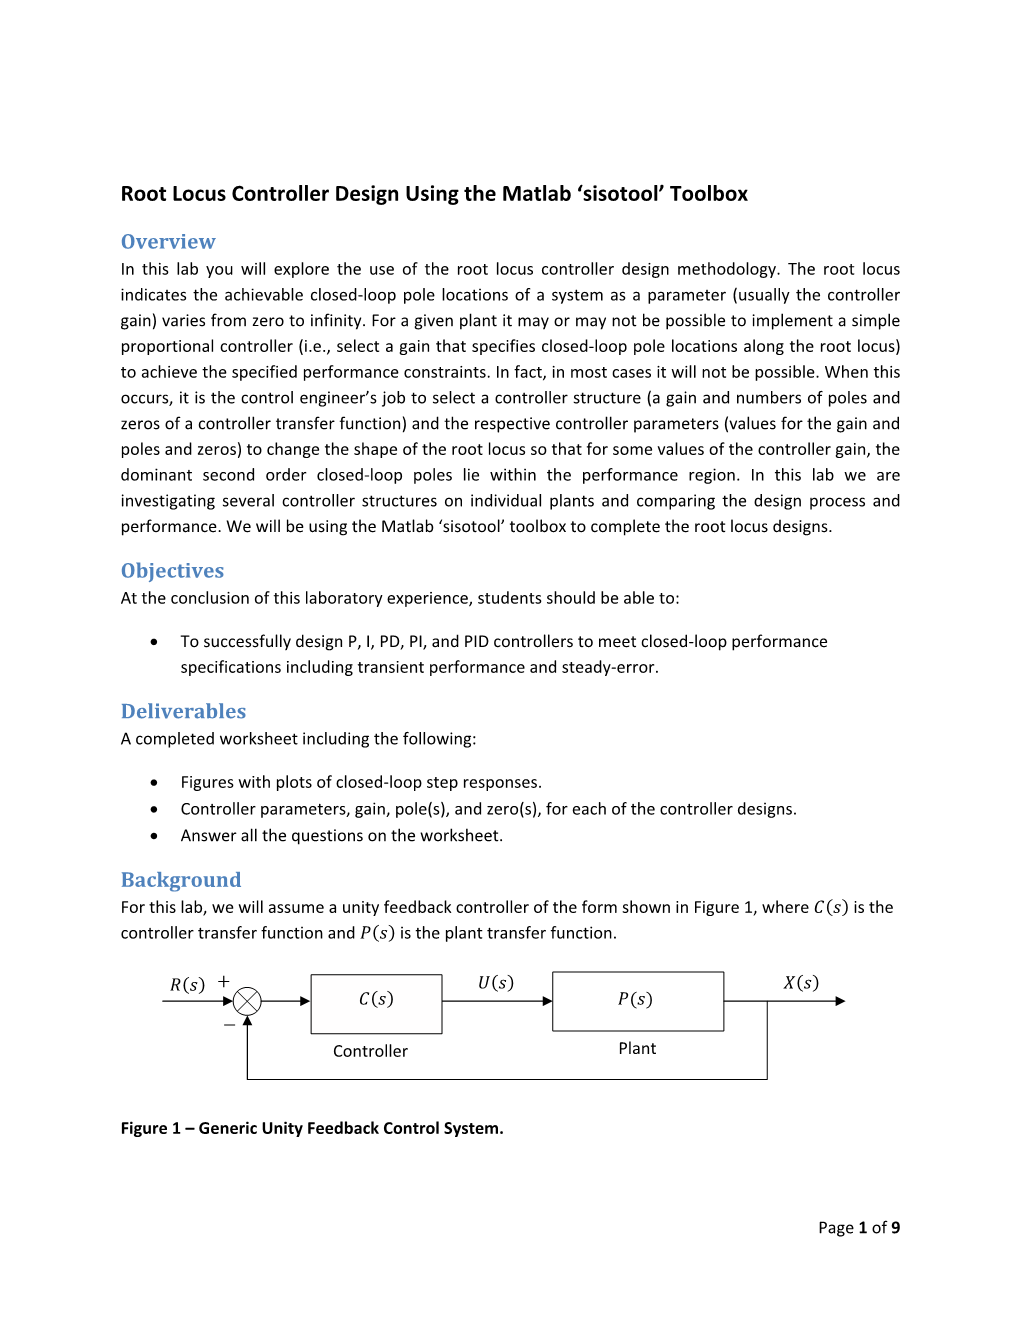 Root Locus Controller Design Using the Matlab 'Sisotool' Toolbox